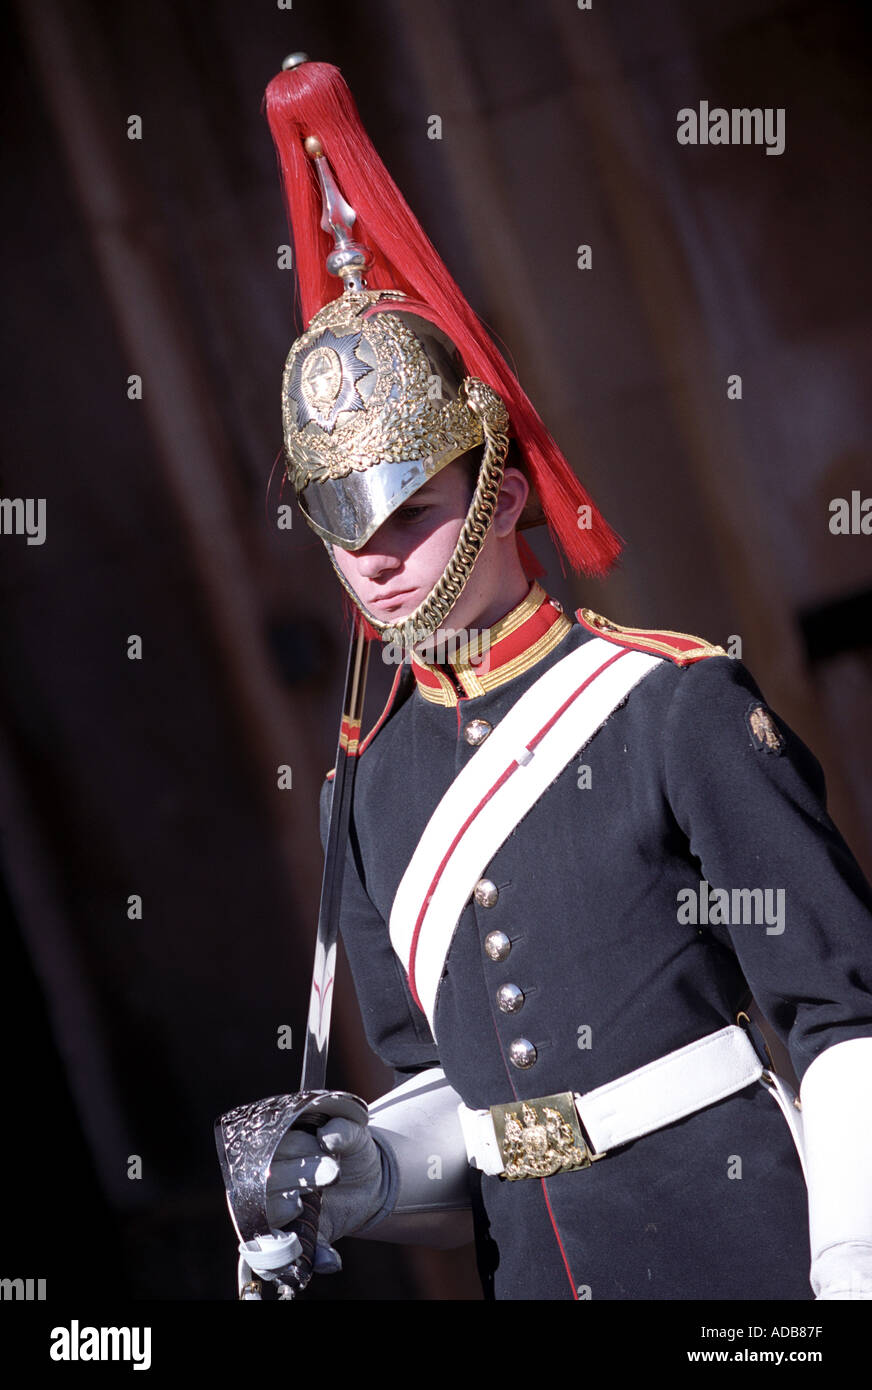 Soldat im Dienst am Horse Guards Parade in London Großbritannien UK Stockfoto